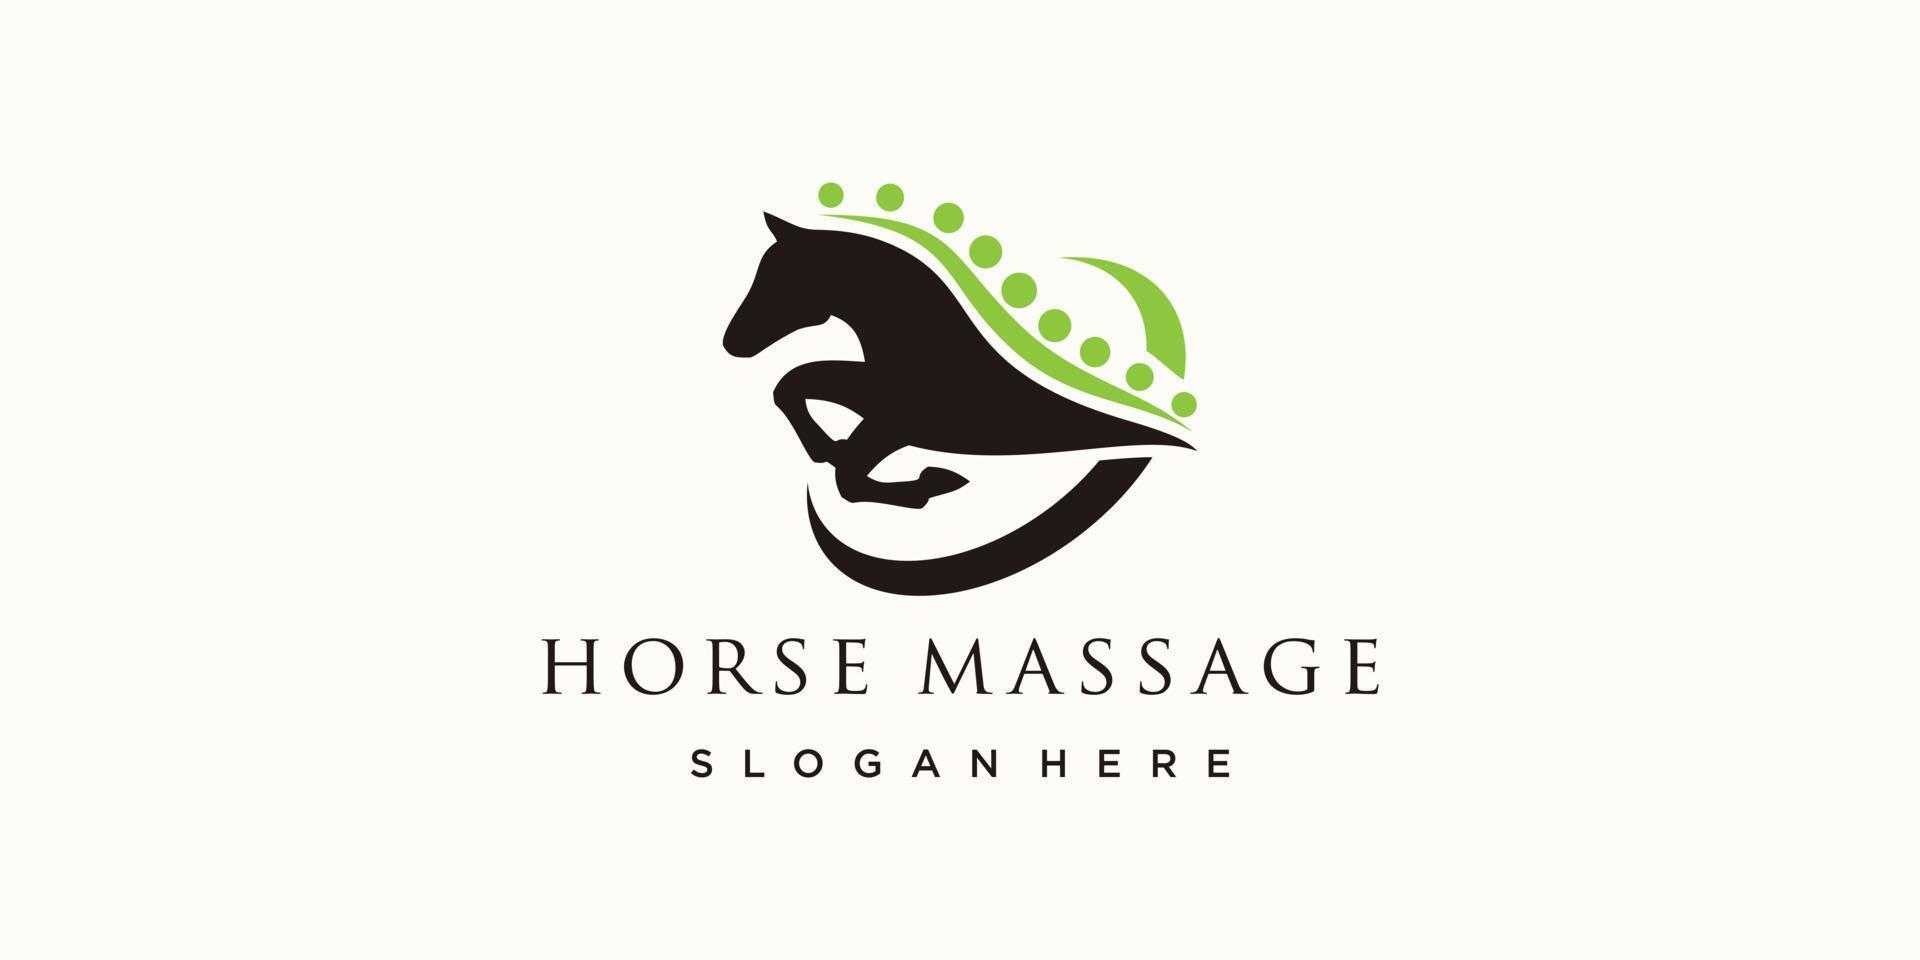 Horse massage logo illustration health care vector